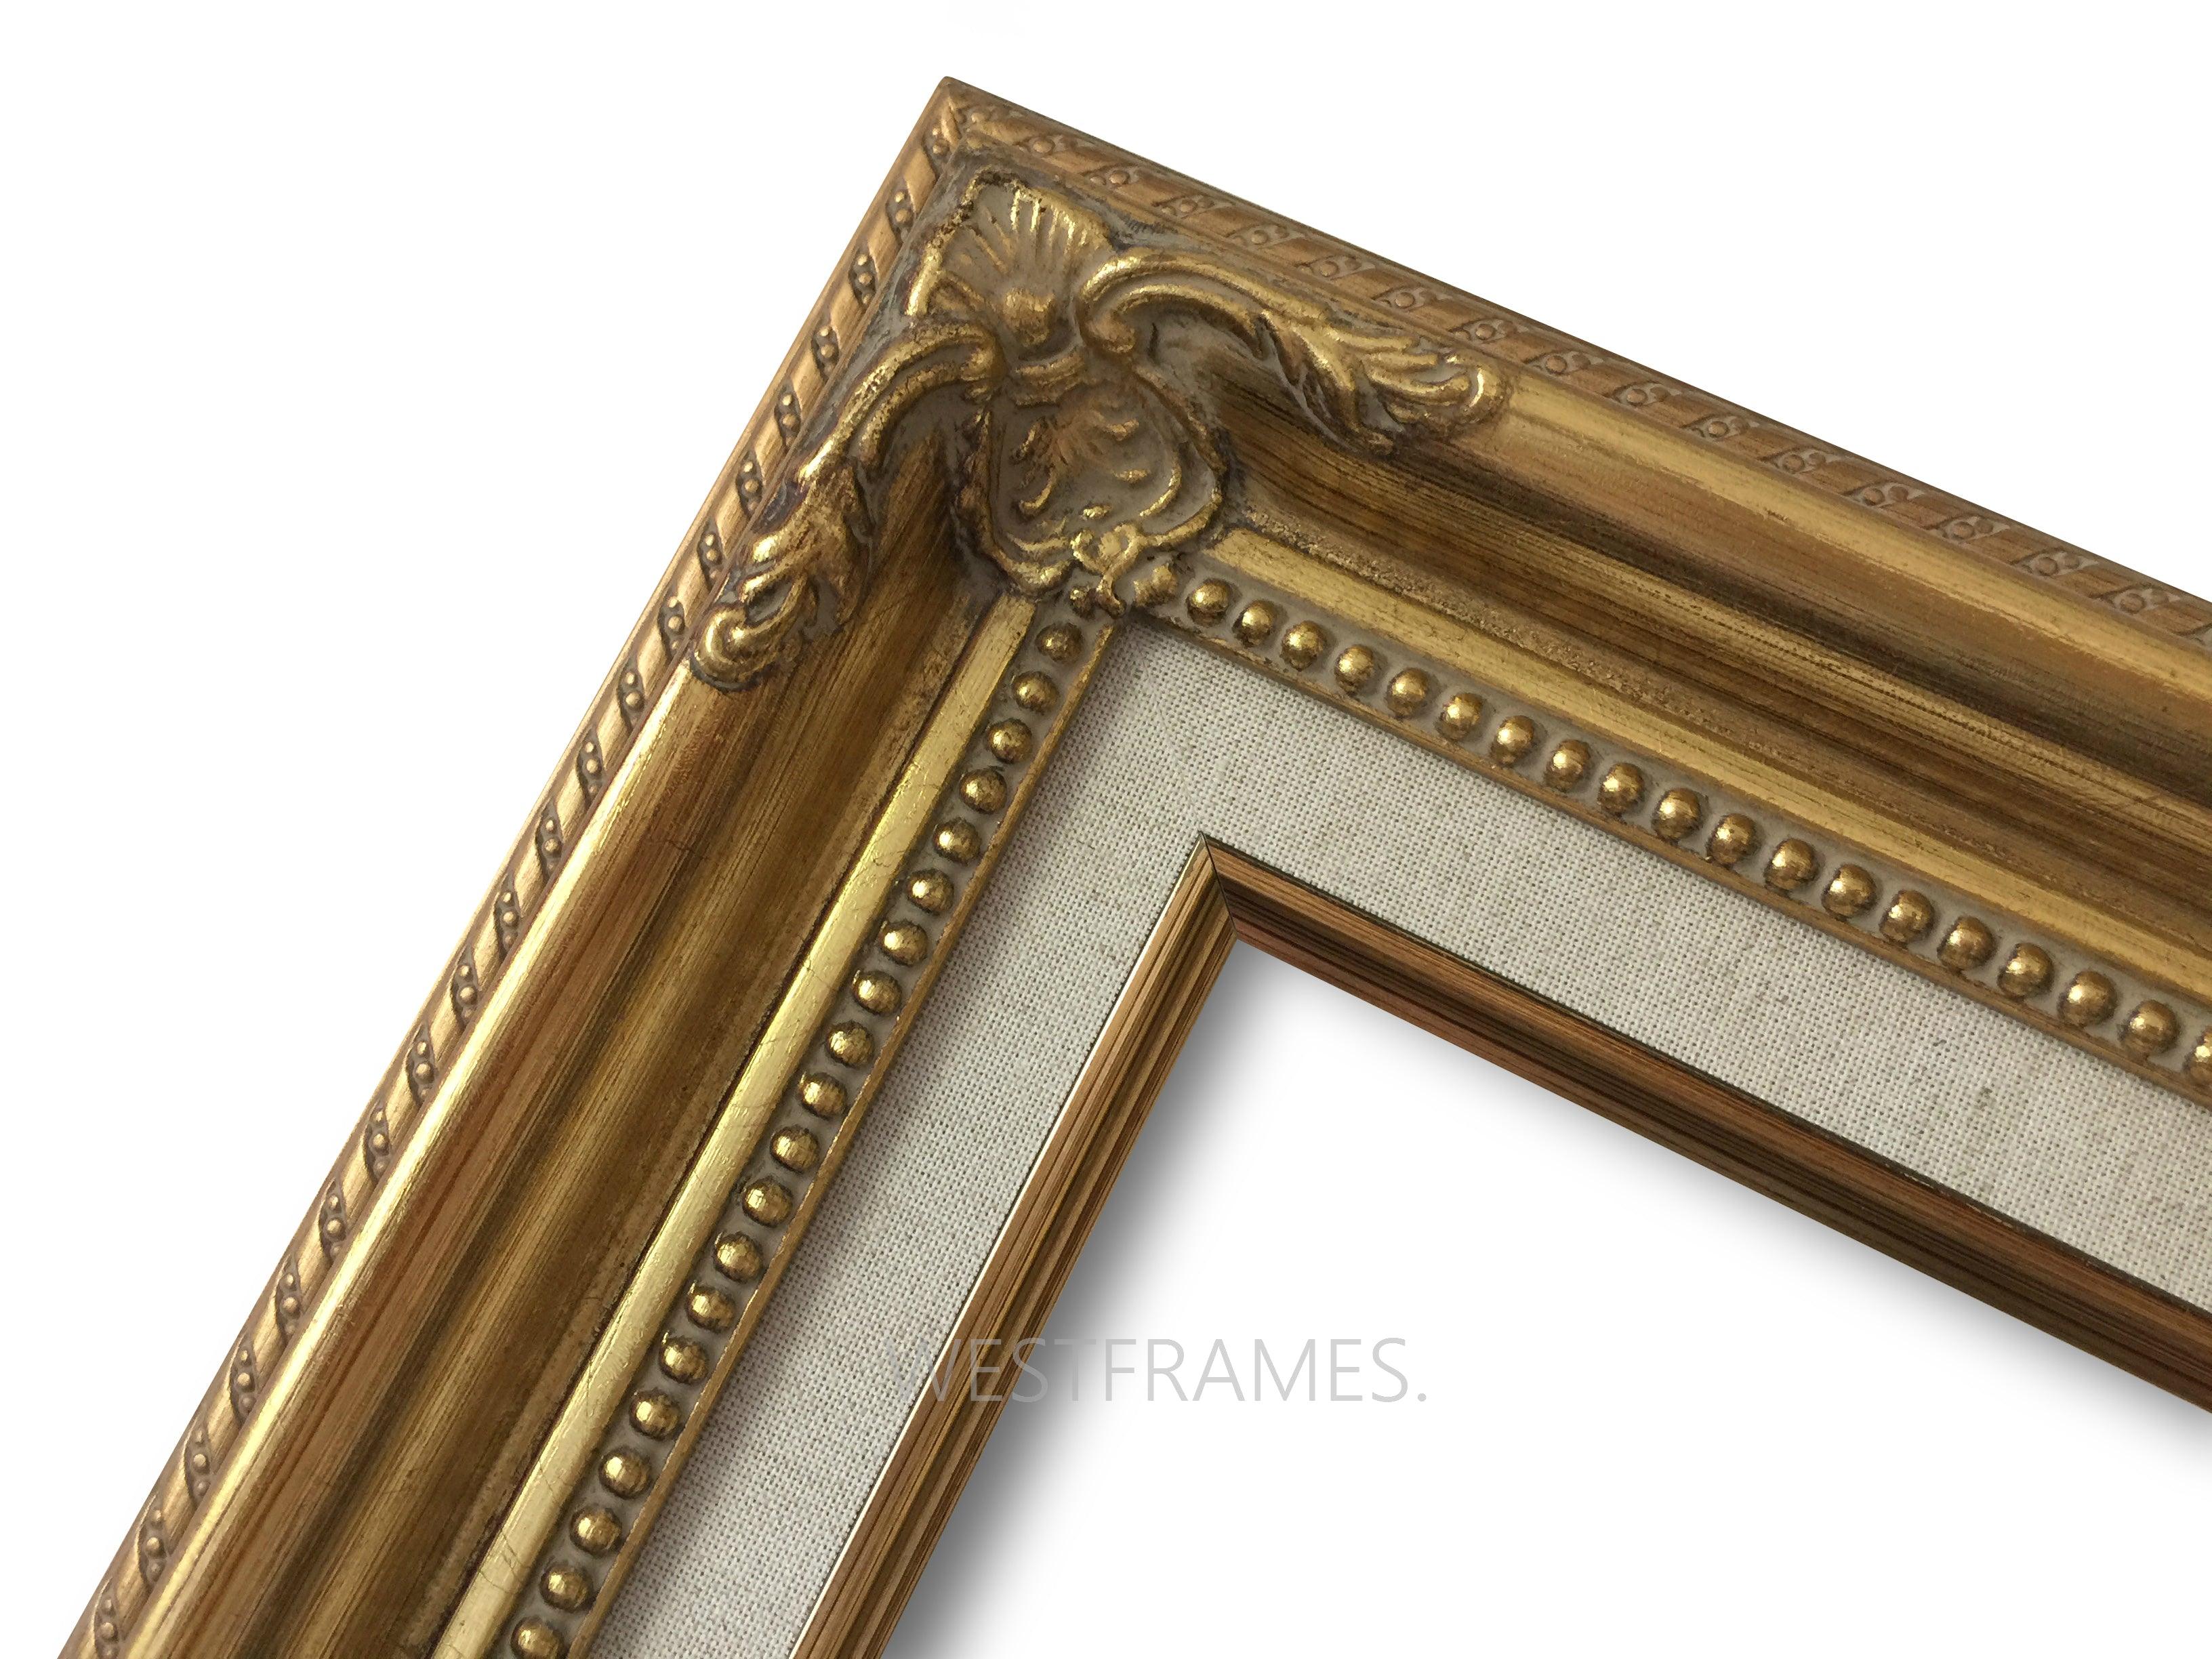 16x20 Rose Gold Chic Frames, Baroque Frame for Canvas, Frame for Painting,  Large Picture Frame, Ornate Frame, Wedding Frame 